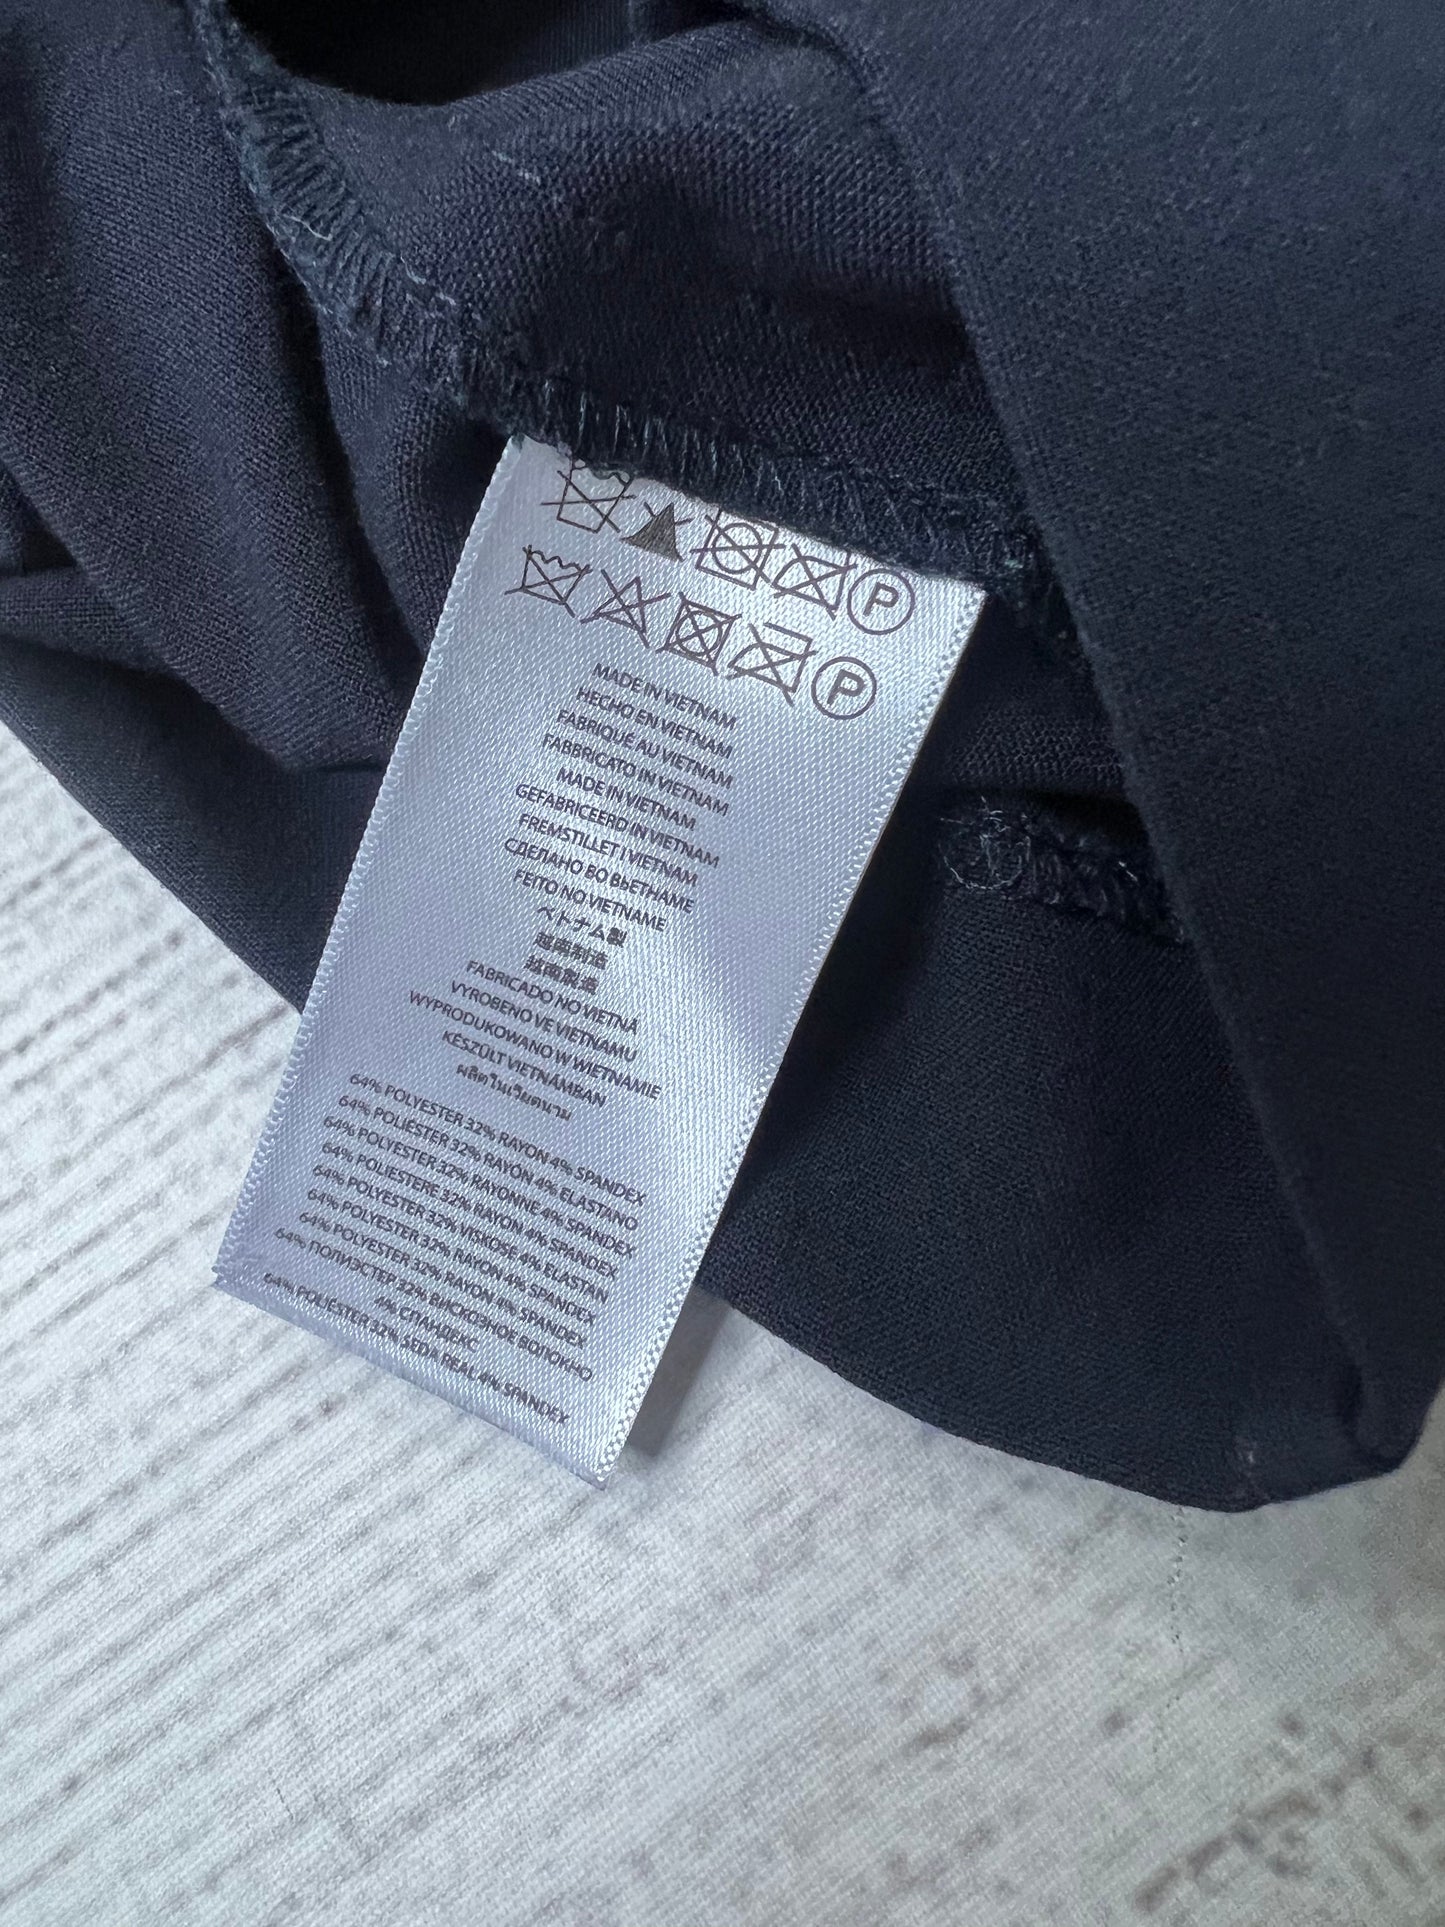 Dress Designer By Michael Kors  Size: Xs